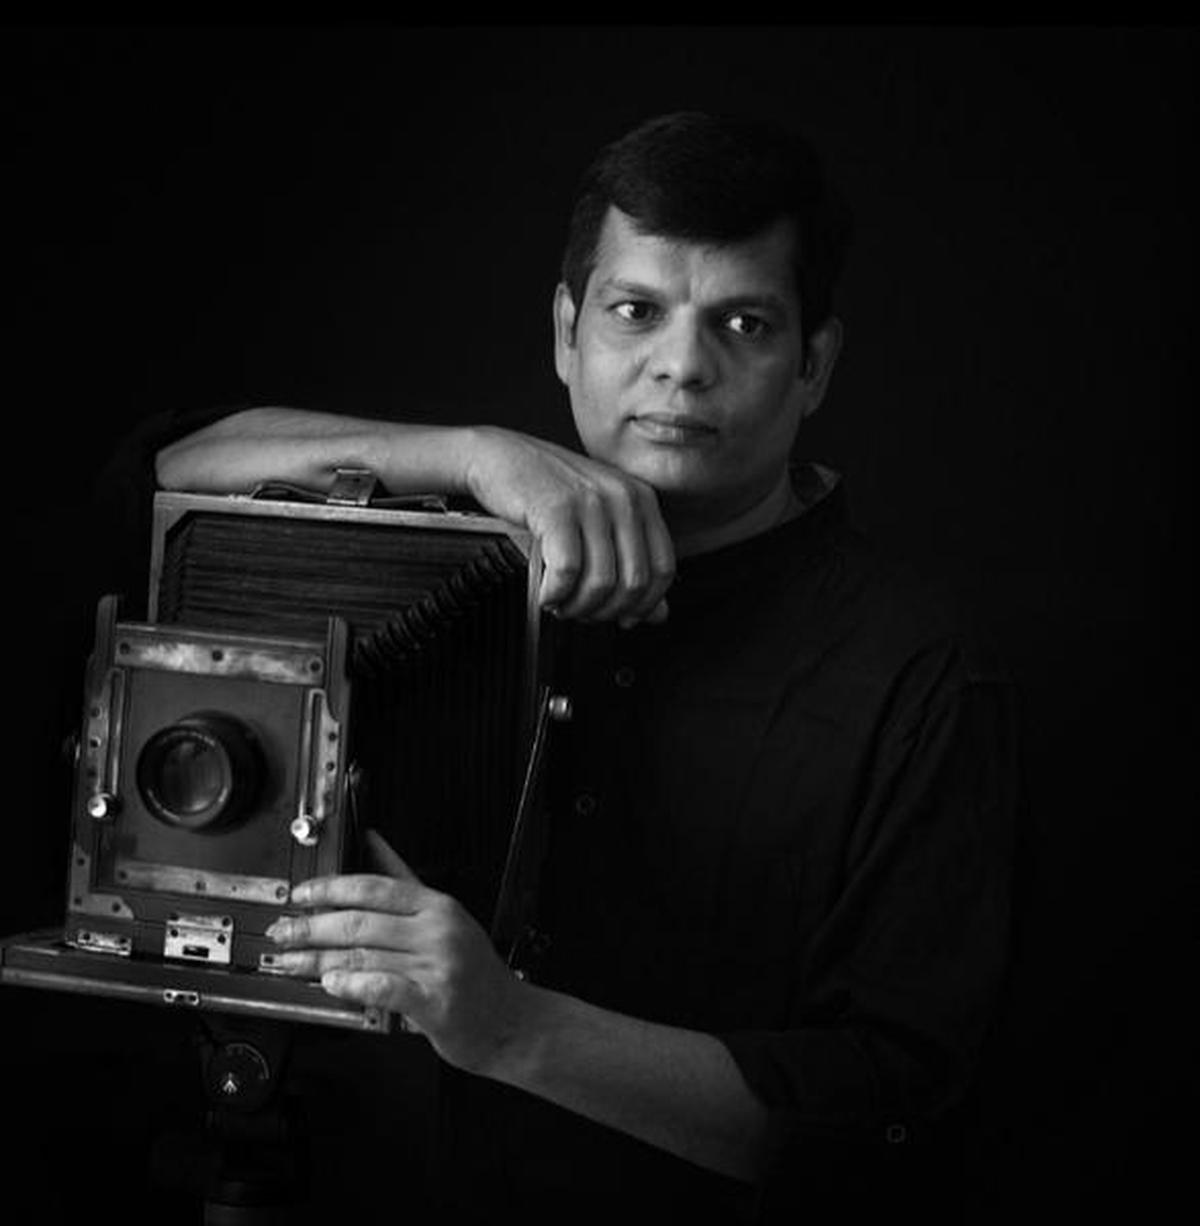 Photographer Senthil Kumaran